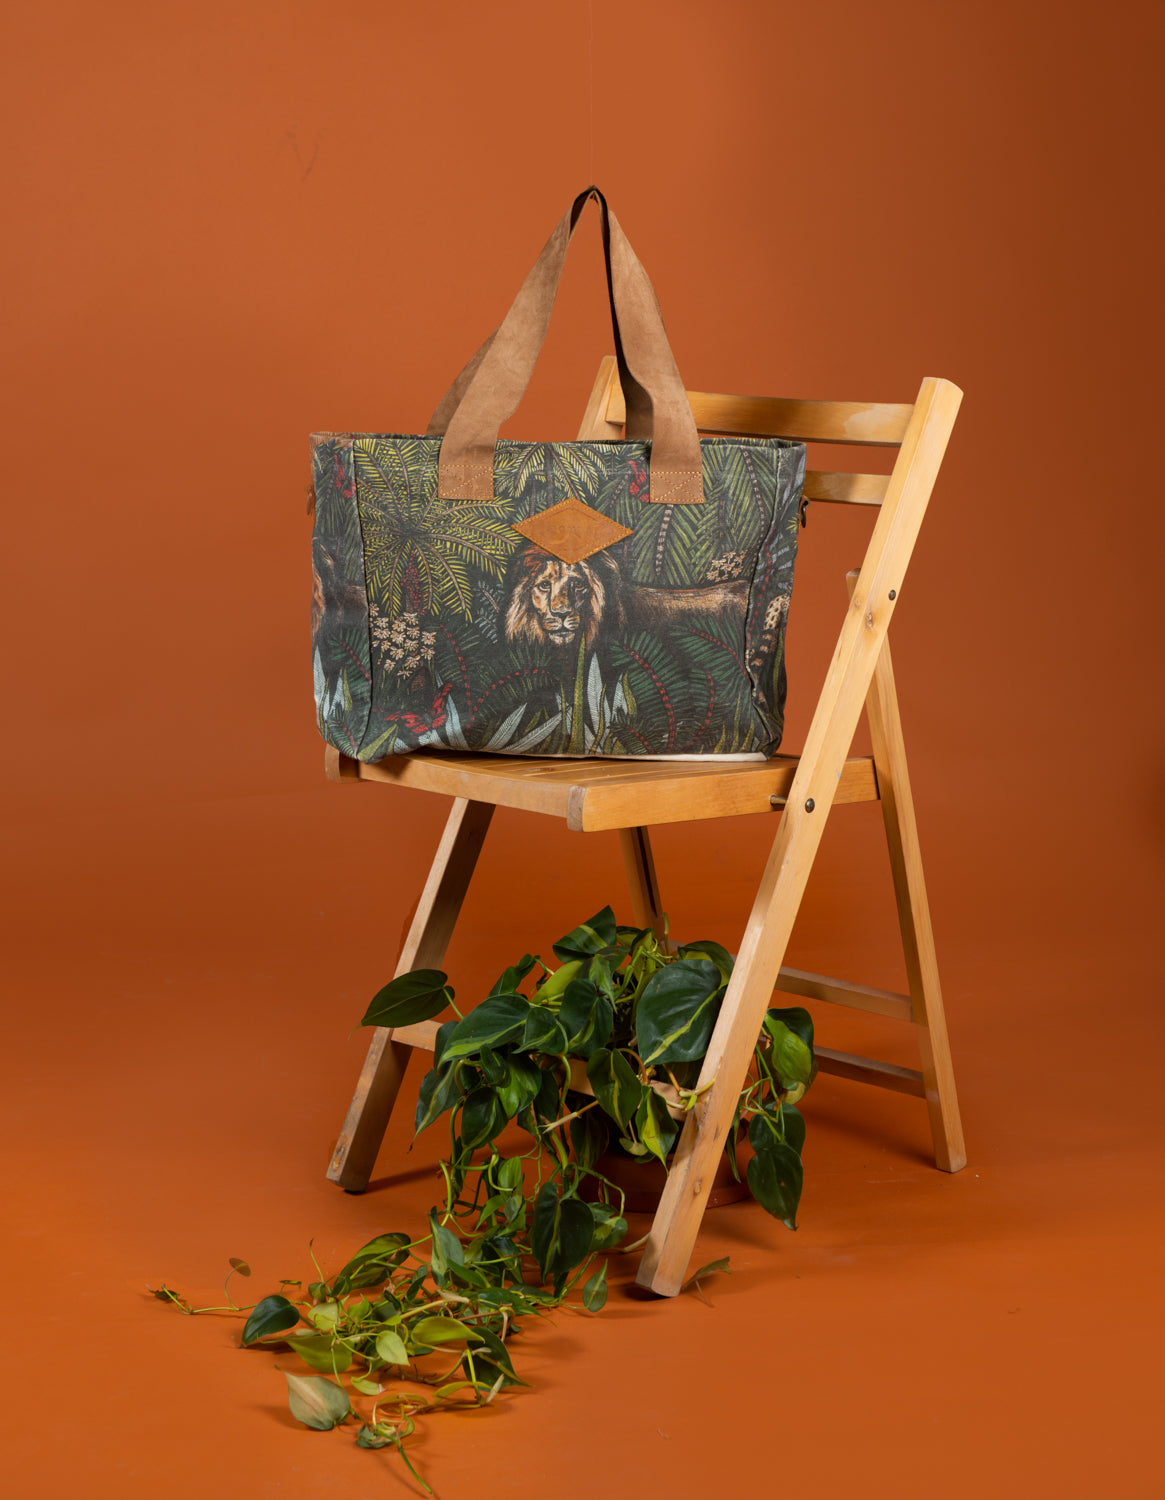 The Mini Bag by KL Studios